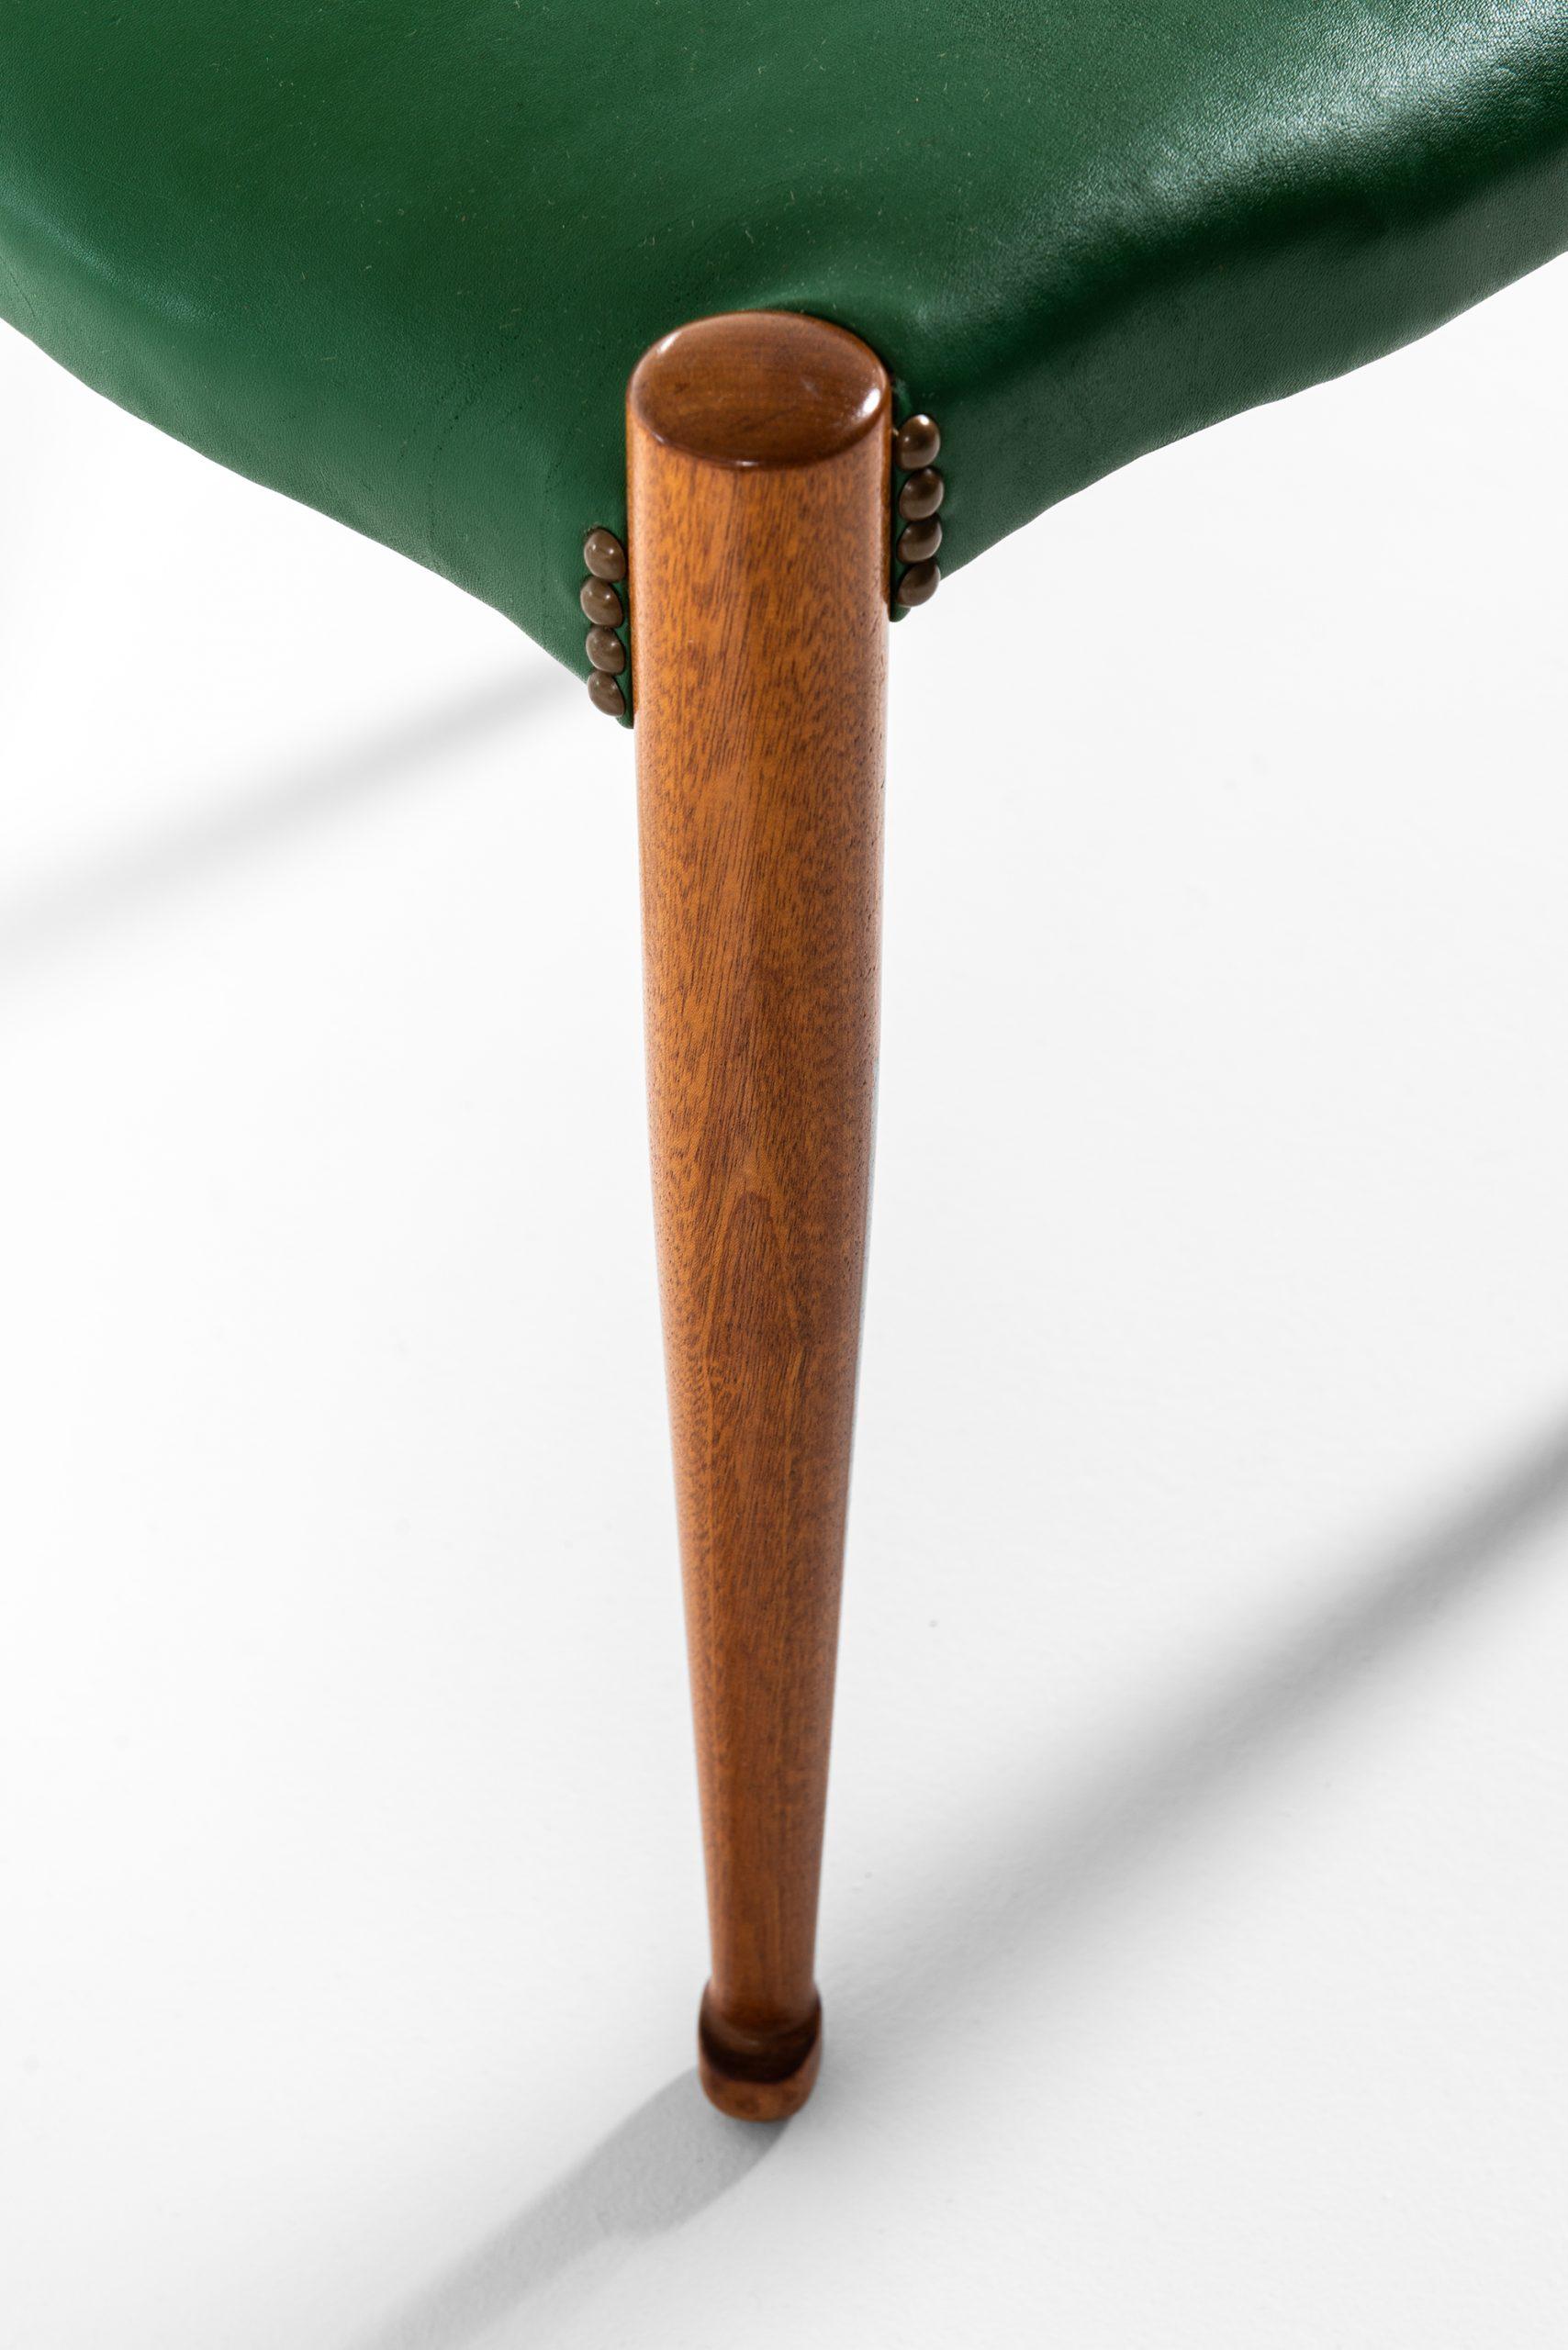 Rare pair of stools model 973 designed by Josef Frank. Produced by Svenskt Tenn in Sweden.